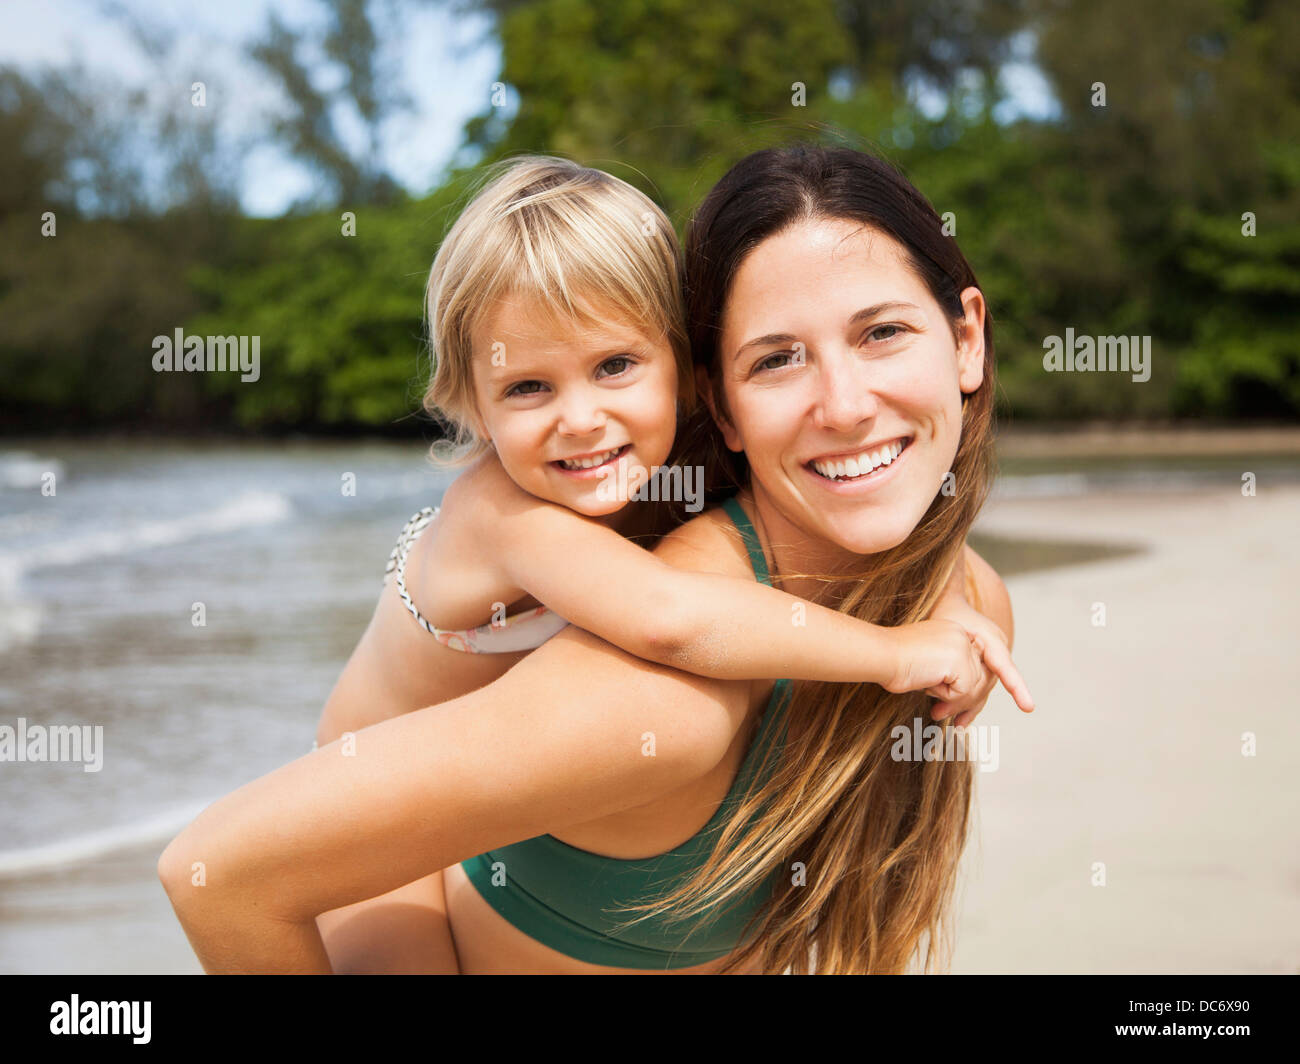 USA, Hawaii, Kauai, Mother with daughter (2-3) on beach Stock Photo